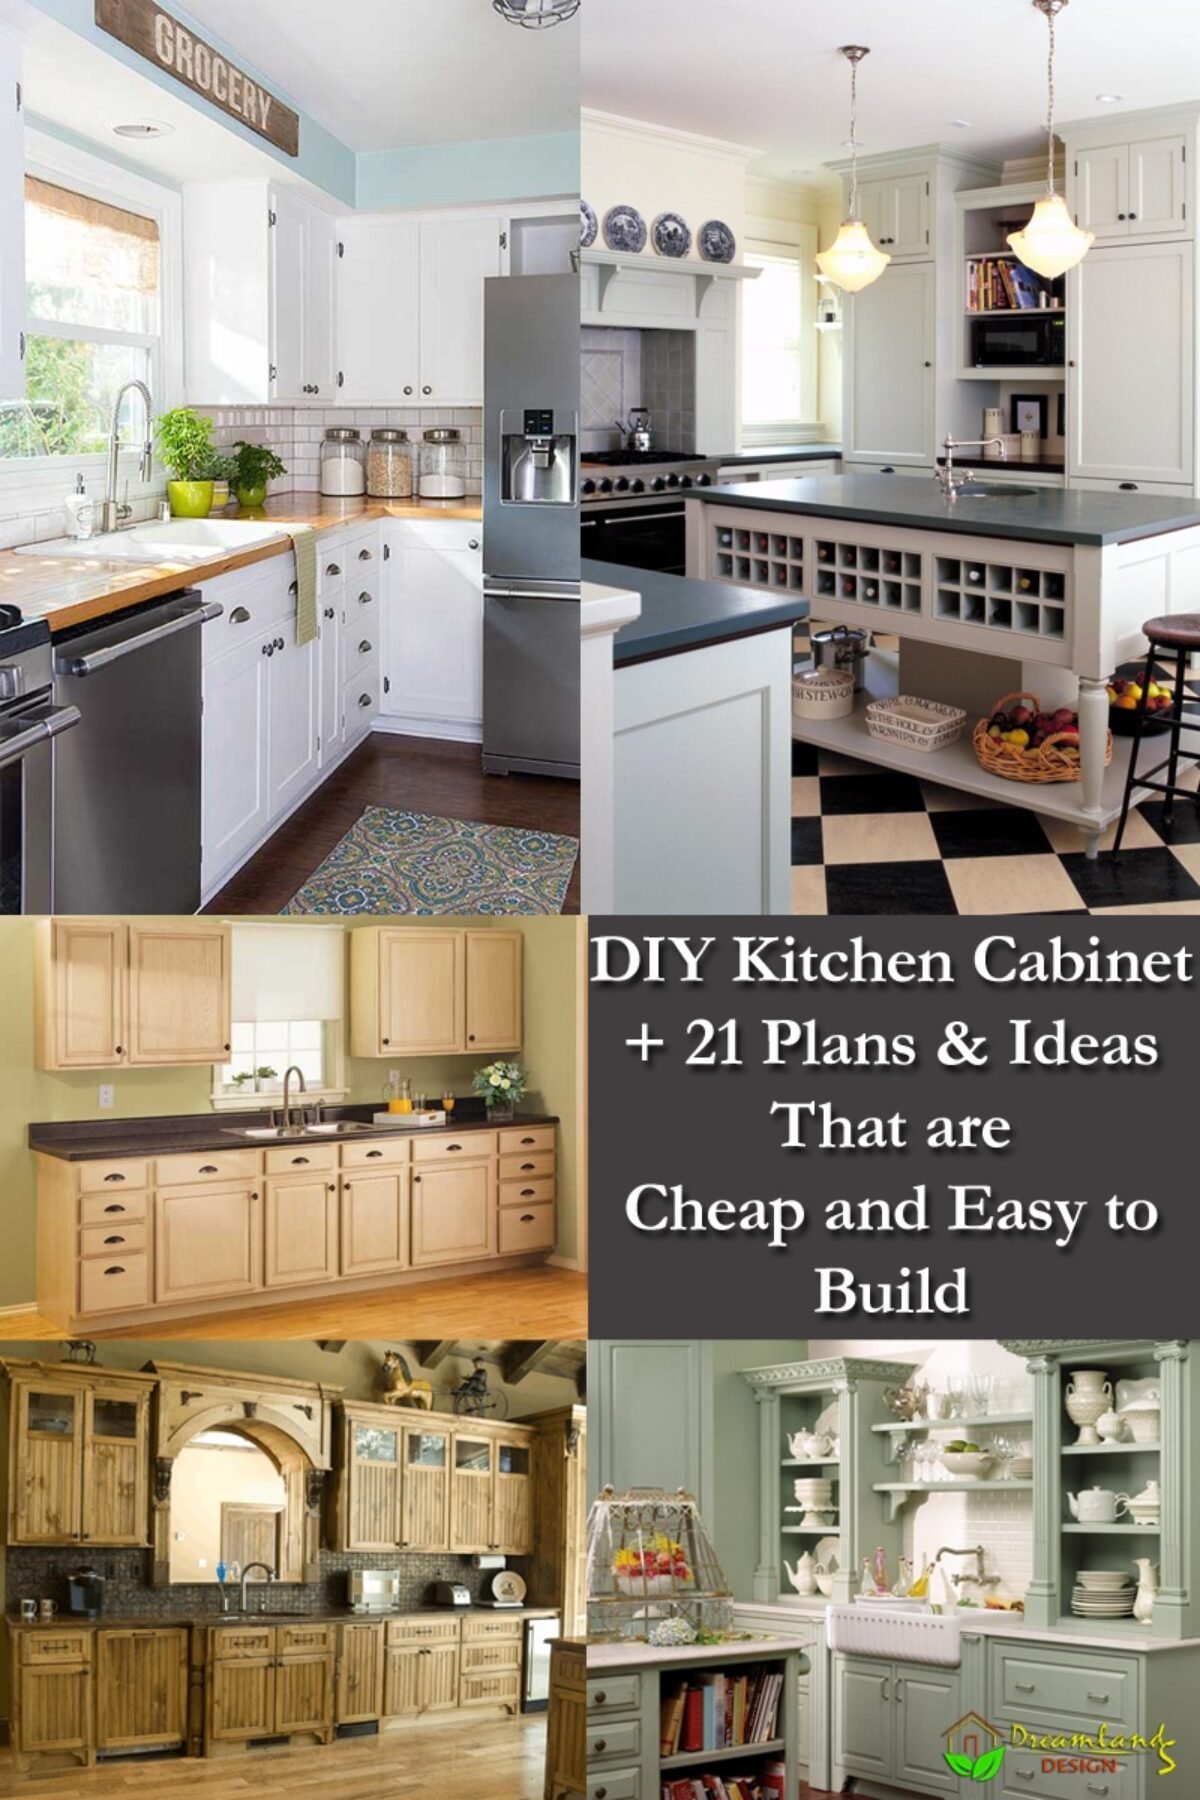 https://www.dreamlandsdesign.com/wp-content/uploads/2017/09/21-DIY-Kitchen-Cabinets-Ideas-and-Plans-Copy-1200x1800.jpg